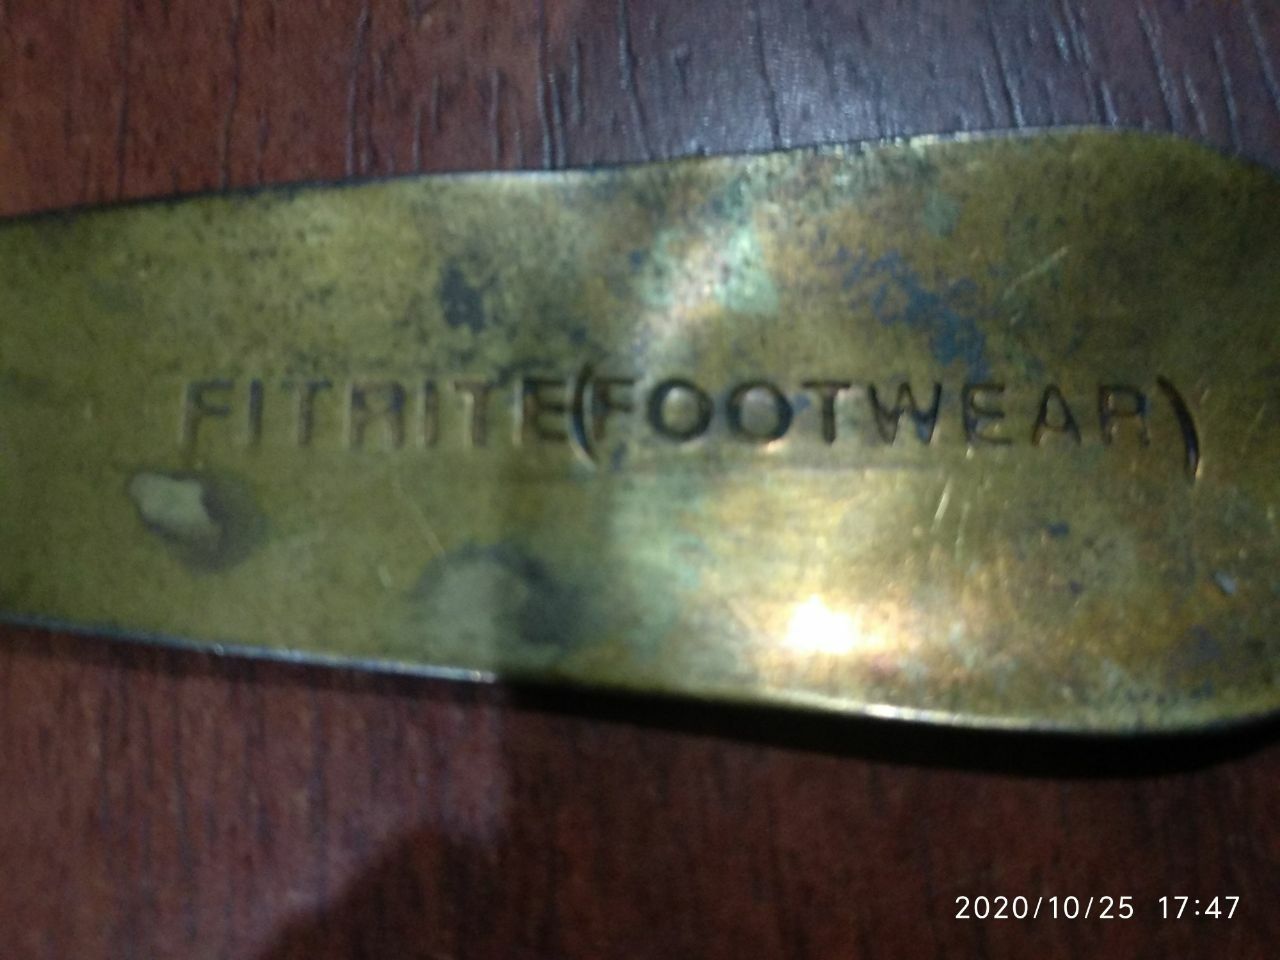 Ложка для обуви, карманная (1950г). "Fitrite Footwear" Made in England